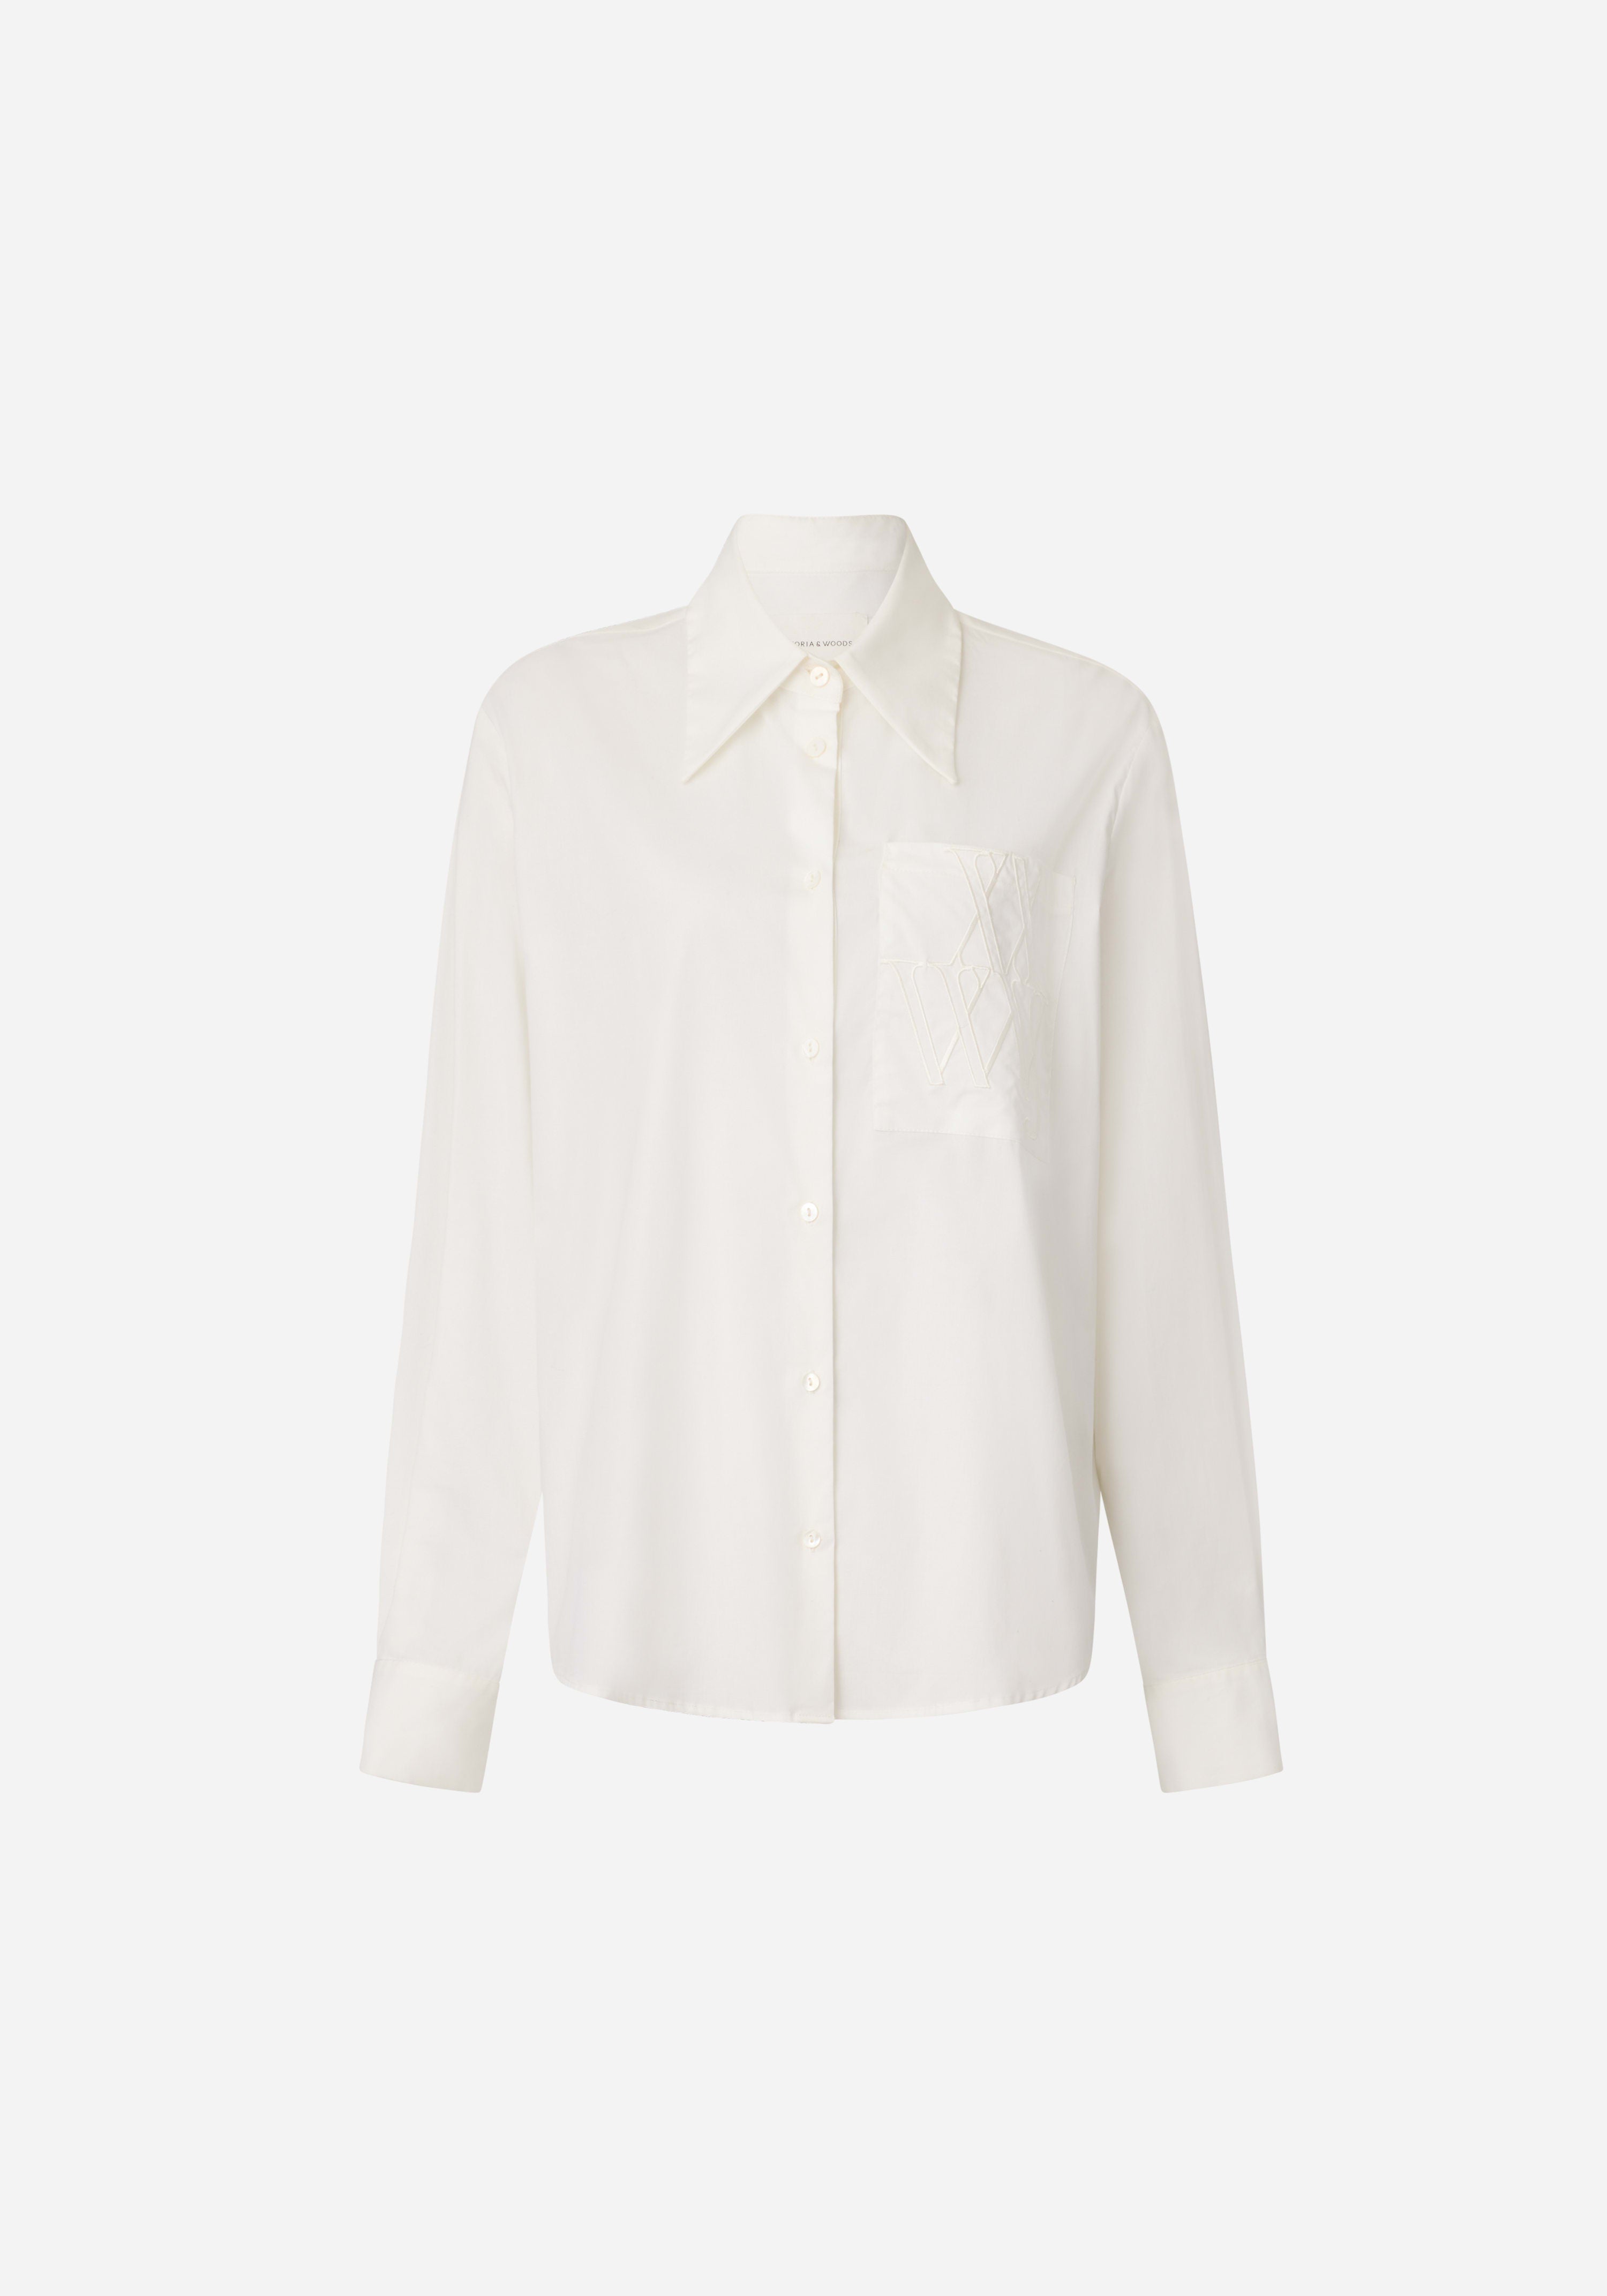 Proclaim Unisex Shirt IN WHITE | SHIRTING | VIKTORIA & WOODS - Viktoria ...